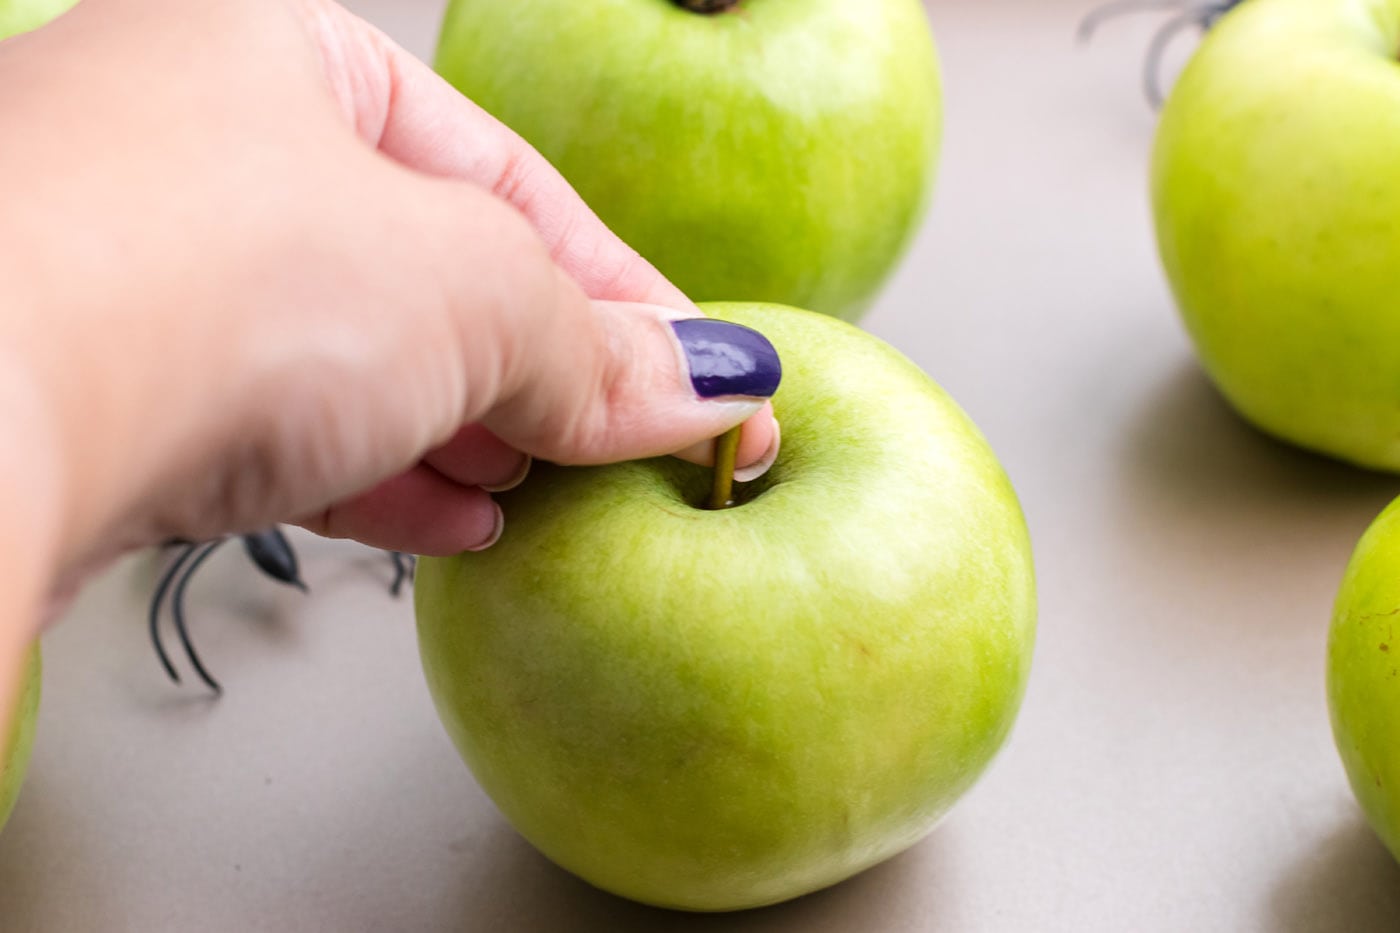 hand removing stem of green apple